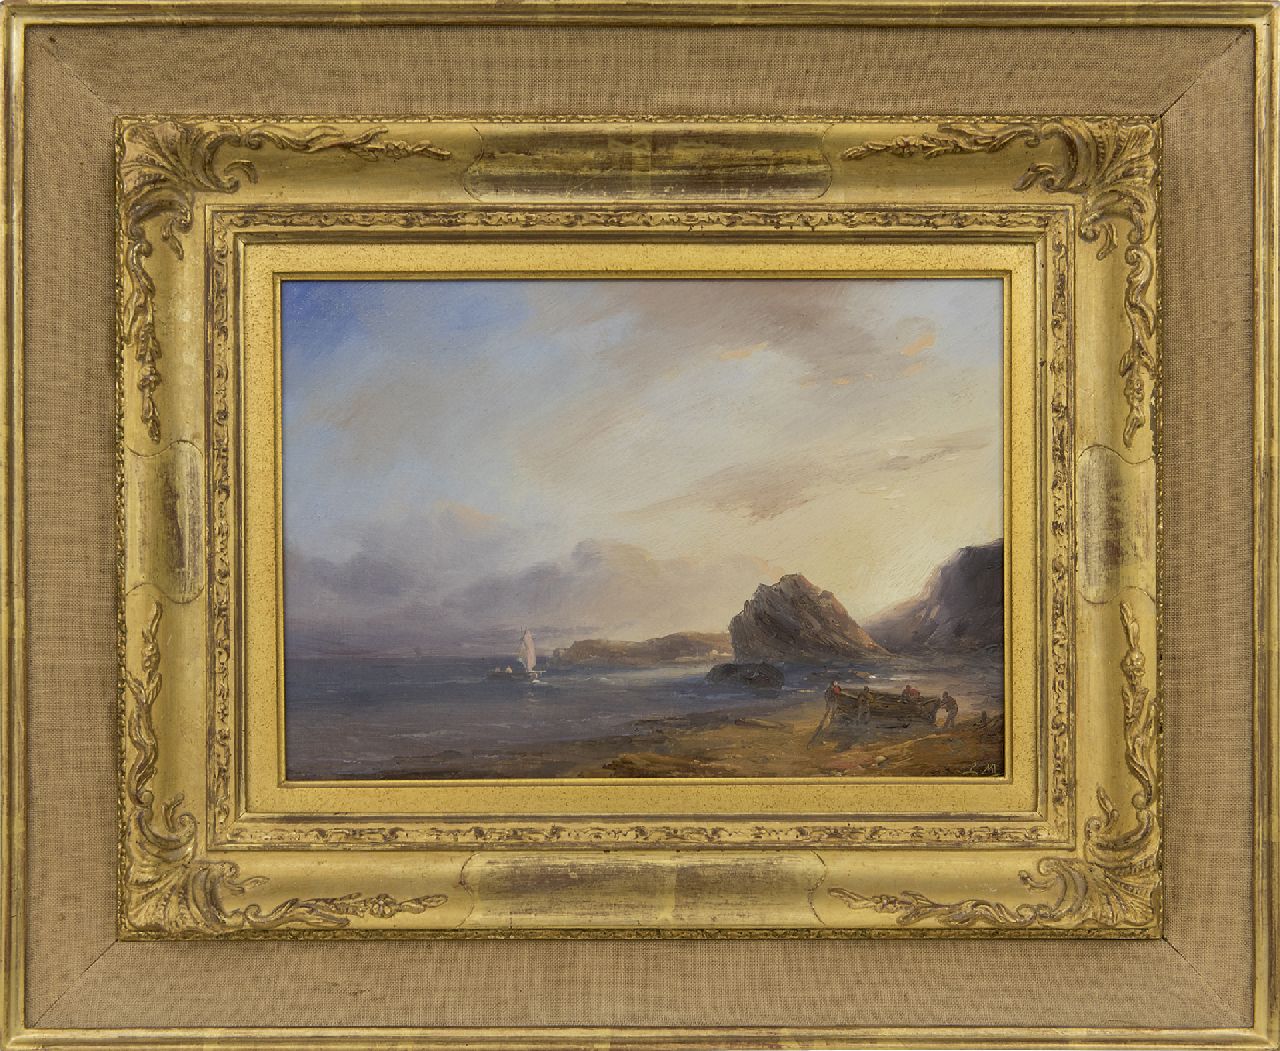 Meijer J.H.L.  | Johan Hendrik 'Louis' Meijer | Paintings offered for sale | Rocky coast, oil on panel 20.0 x 29.0 cm, gesigneerd rechtsonder met monogram